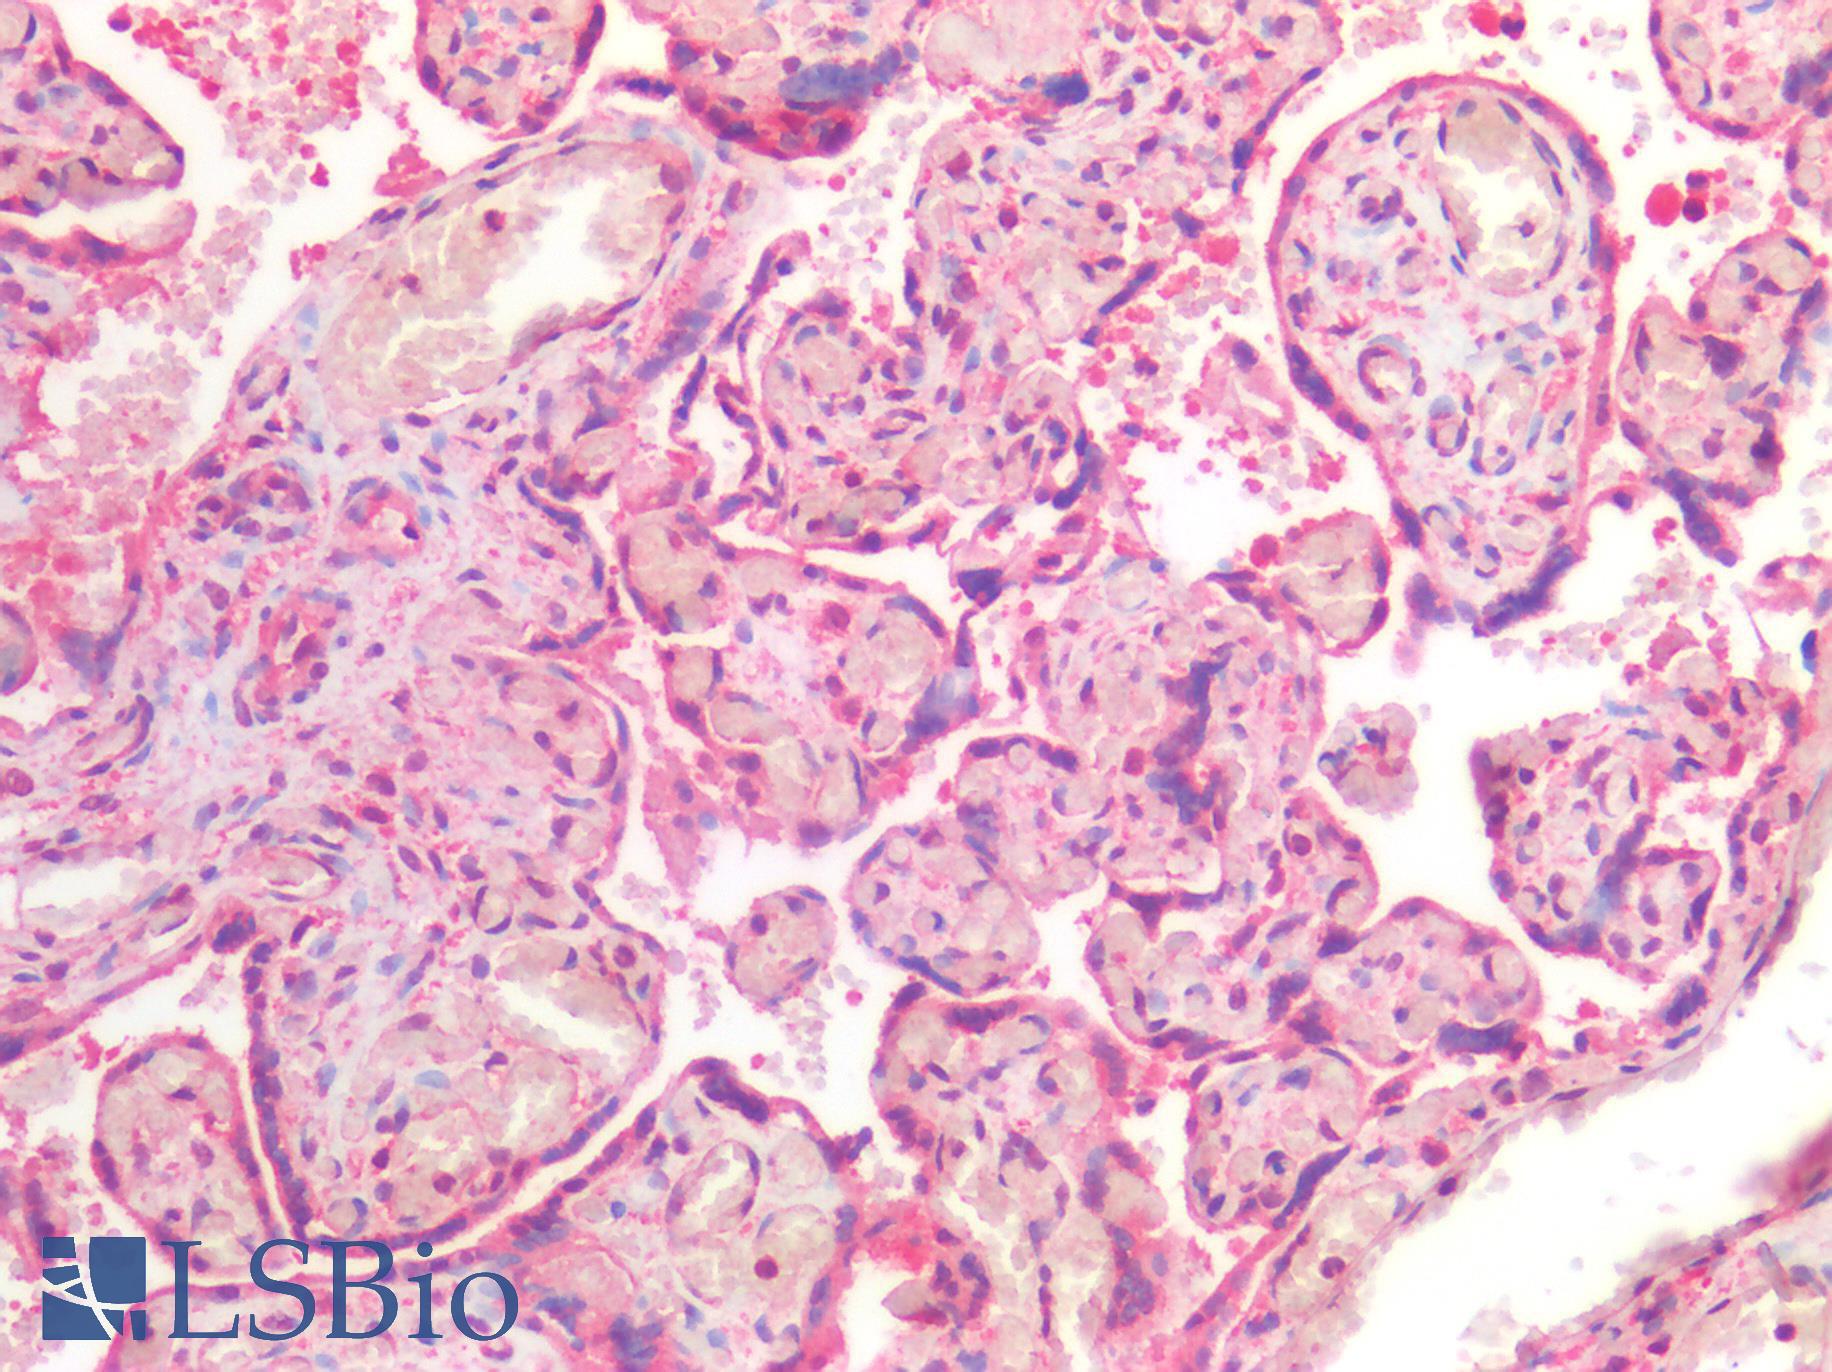 CD118 / LIF Receptor Alpha Antibody - Human Placenta: Formalin-Fixed, Paraffin-Embedded (FFPE)